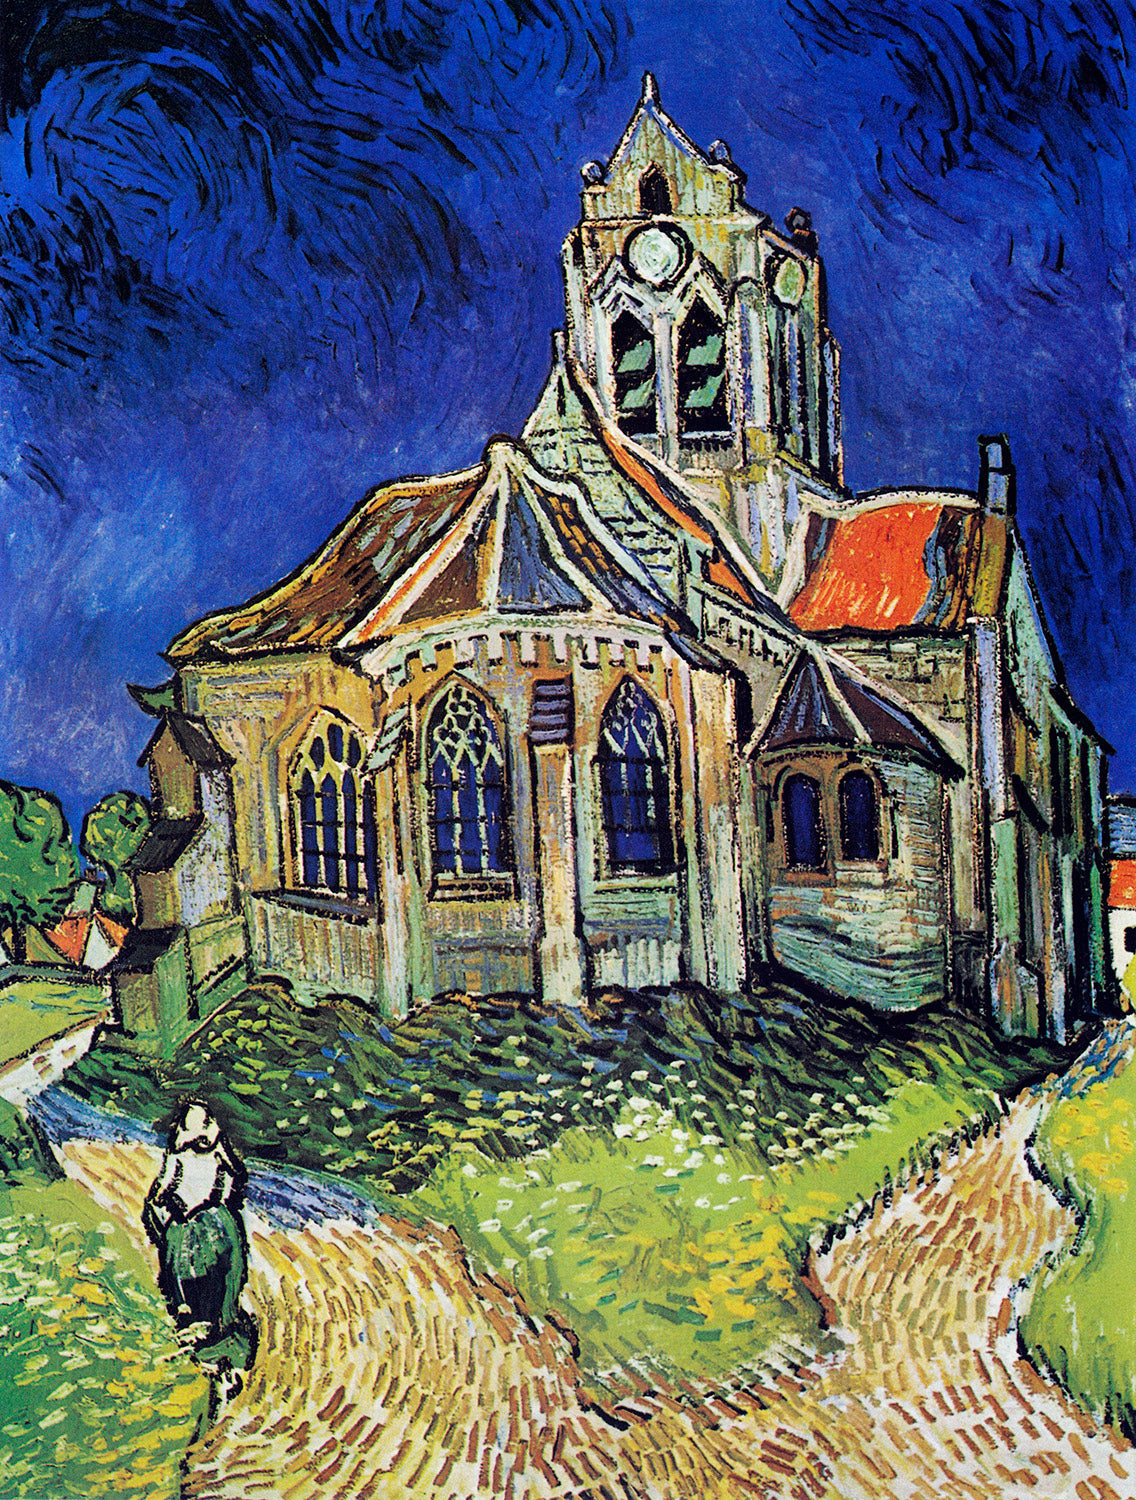 The Church at Auvers by Vincent van Gogh Art Print